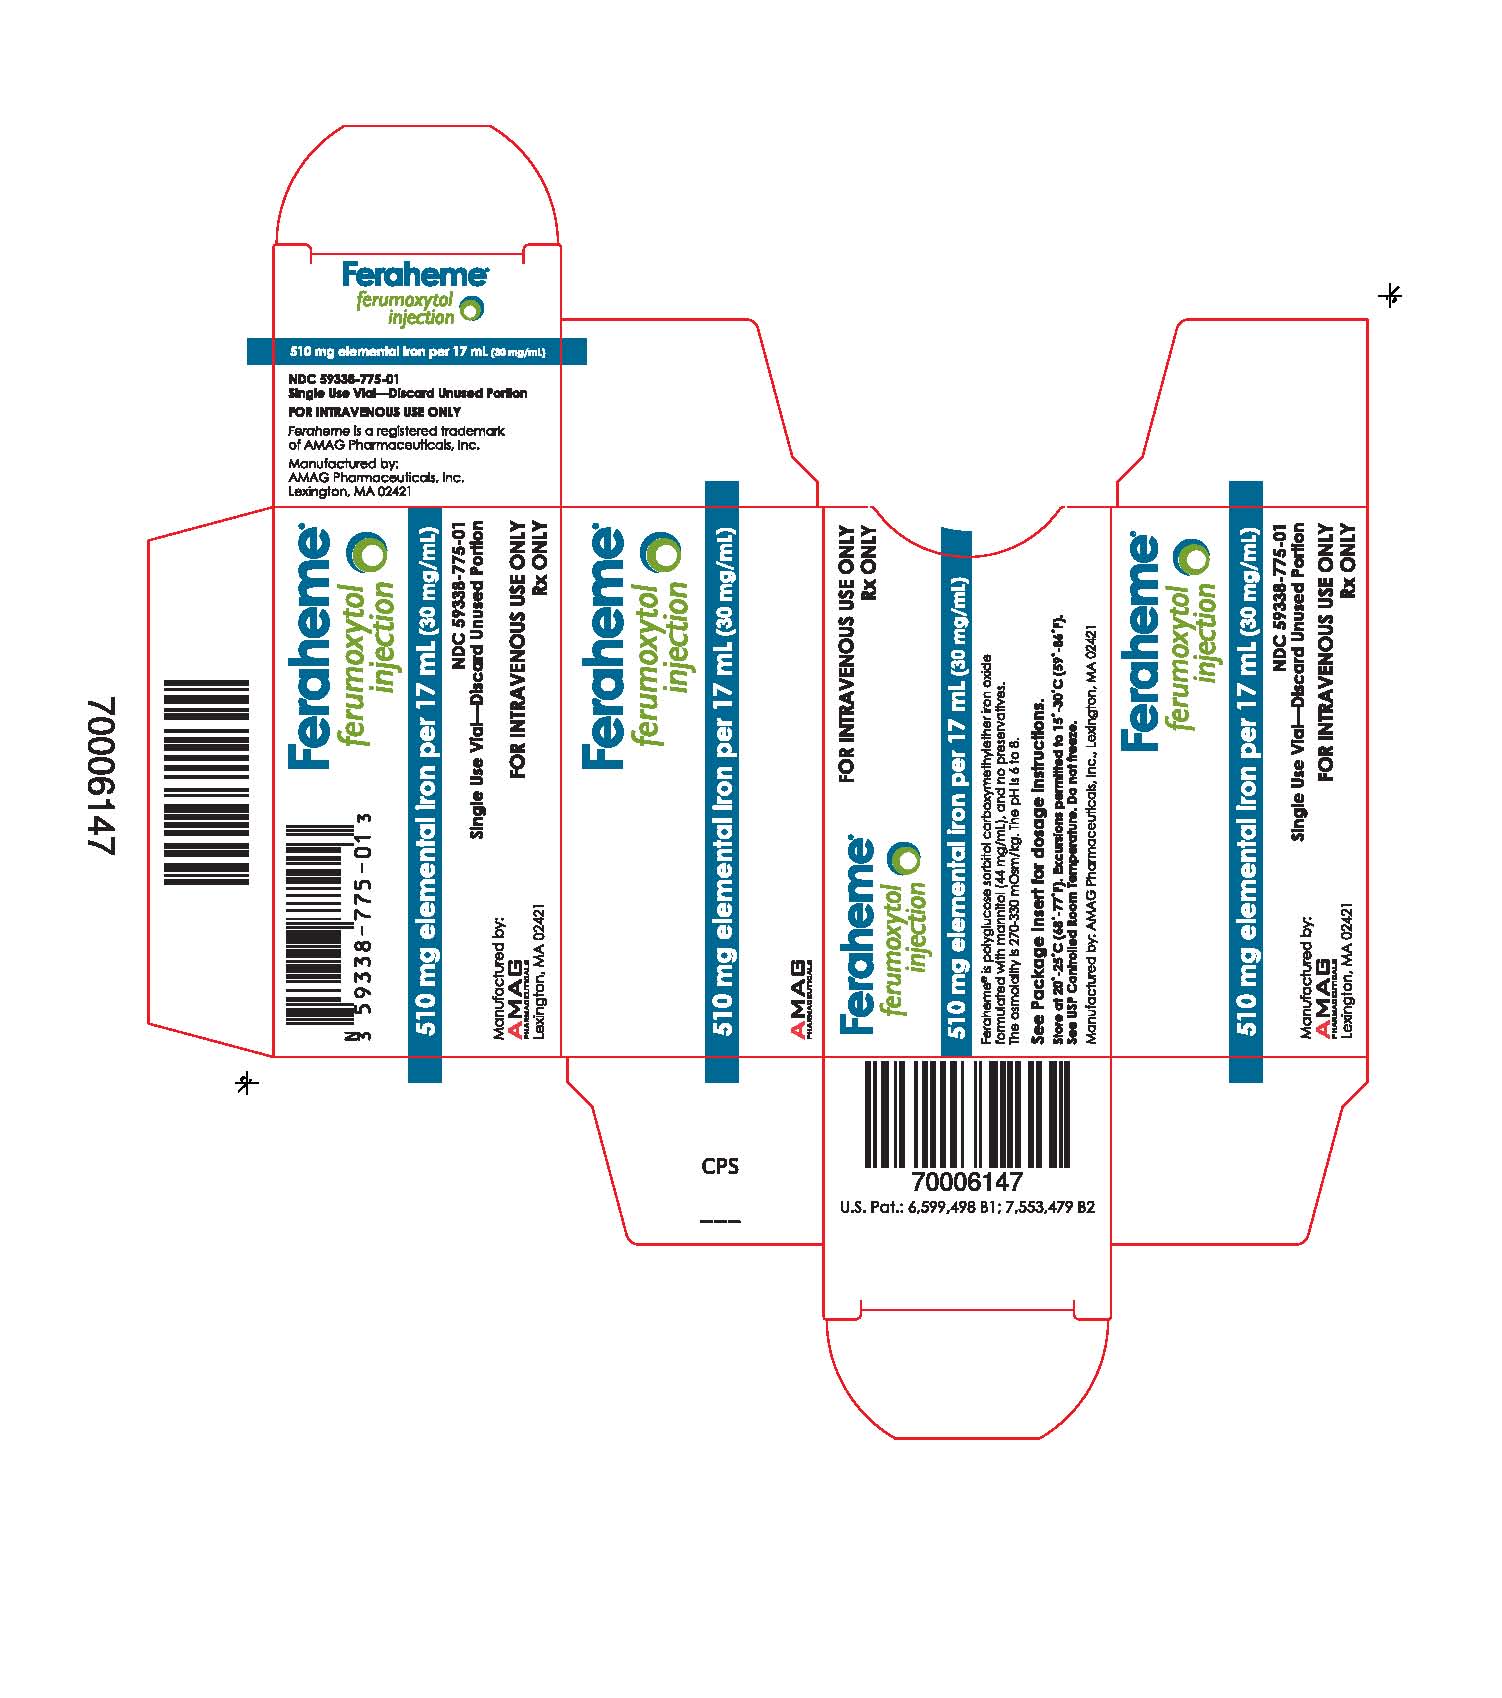 Package Label - Principal Display Panel – Carton for Single Use Vial, Feraheme Injection